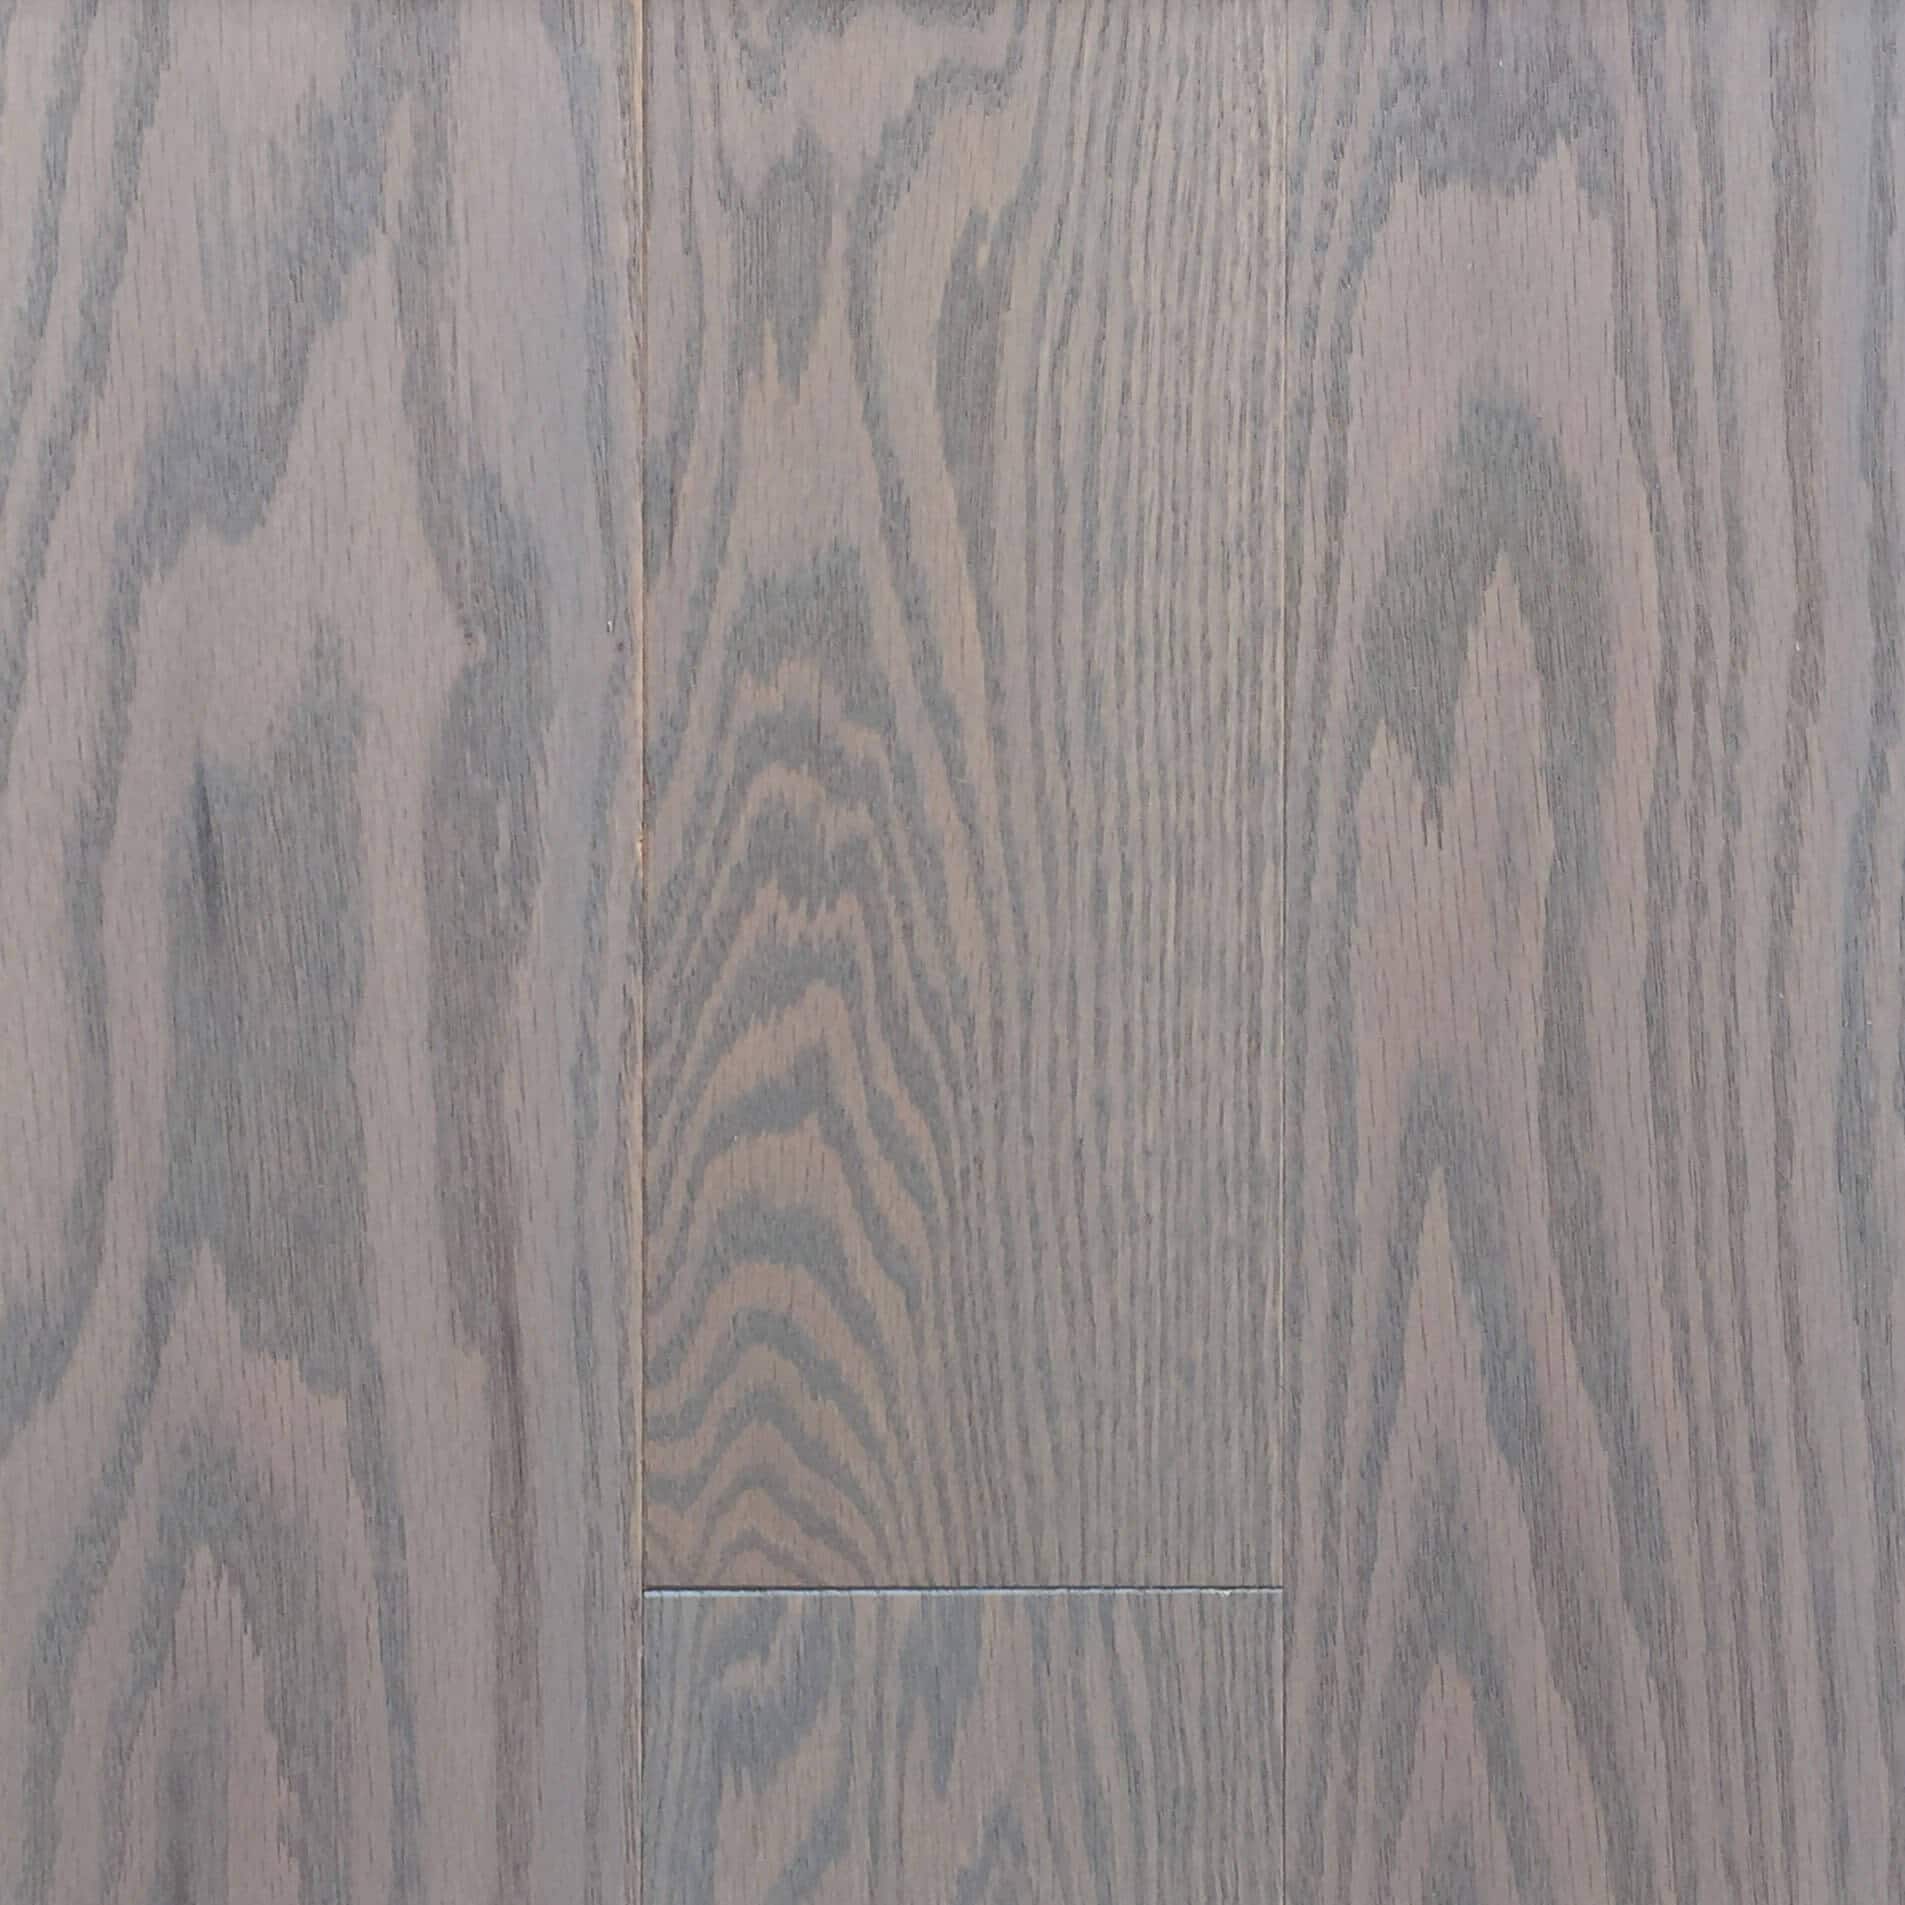 Wire Brushed Hardwood Flooring, Grey Solid Hardwood Floors